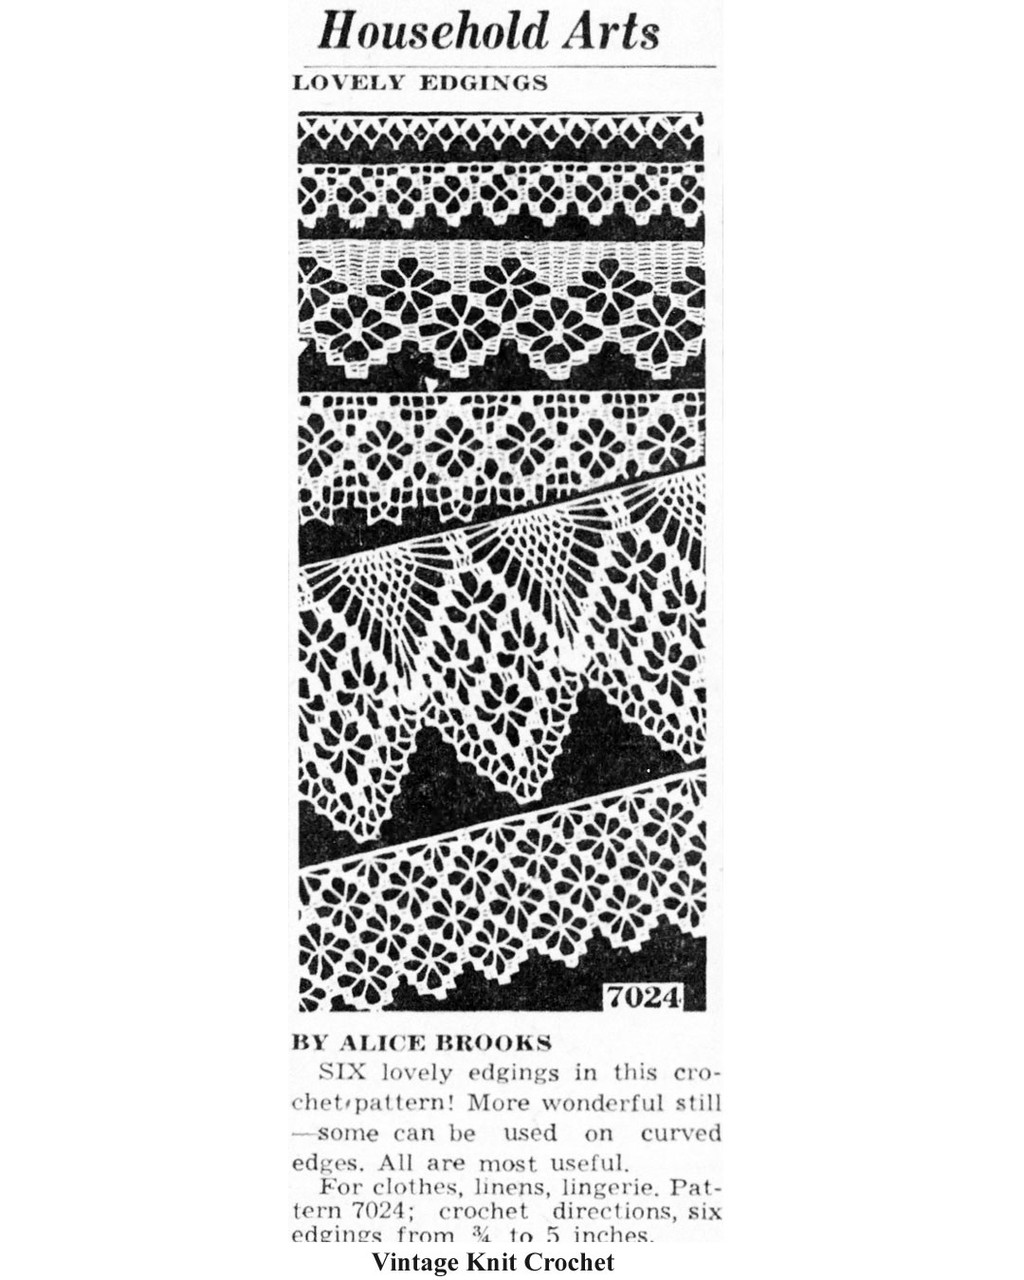 Mail Order Design 7024 Crochet Edgings Newspaper advertisement 
